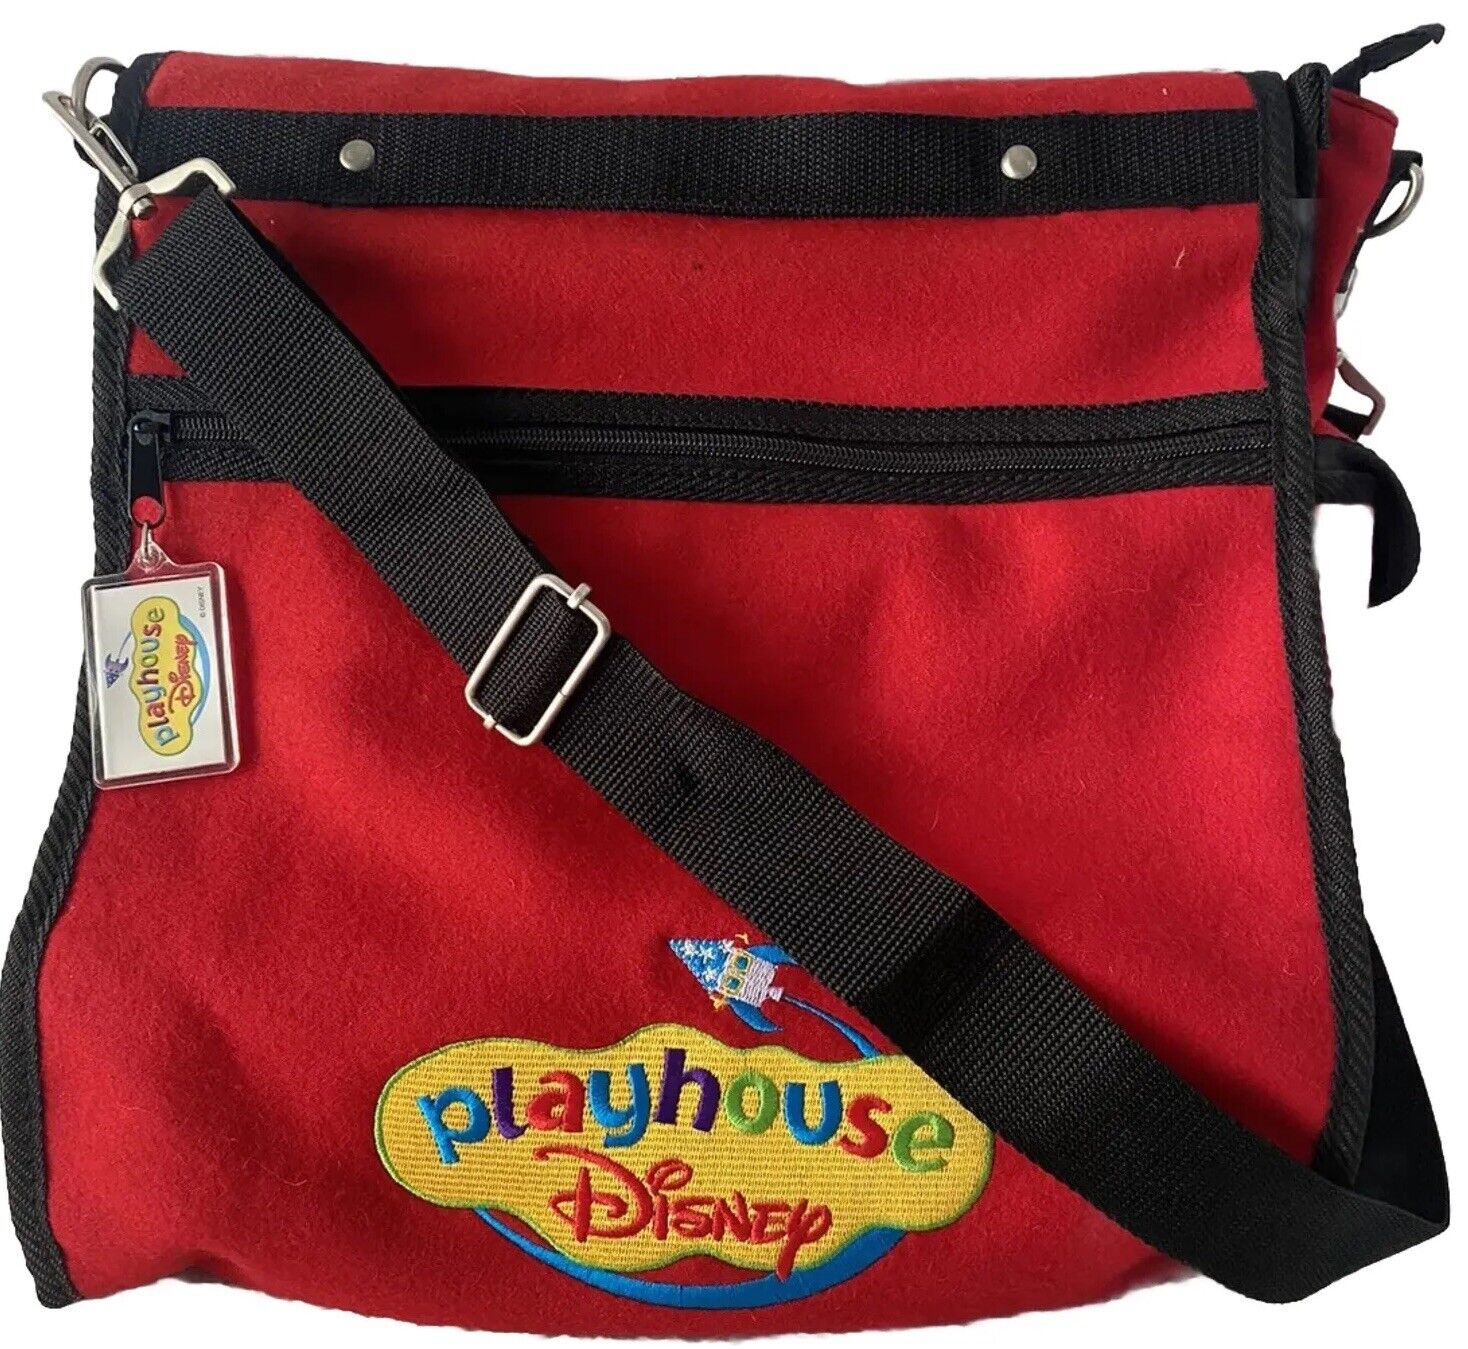 Vintage Disney Messenger Bag Backpack Disney Playhouse